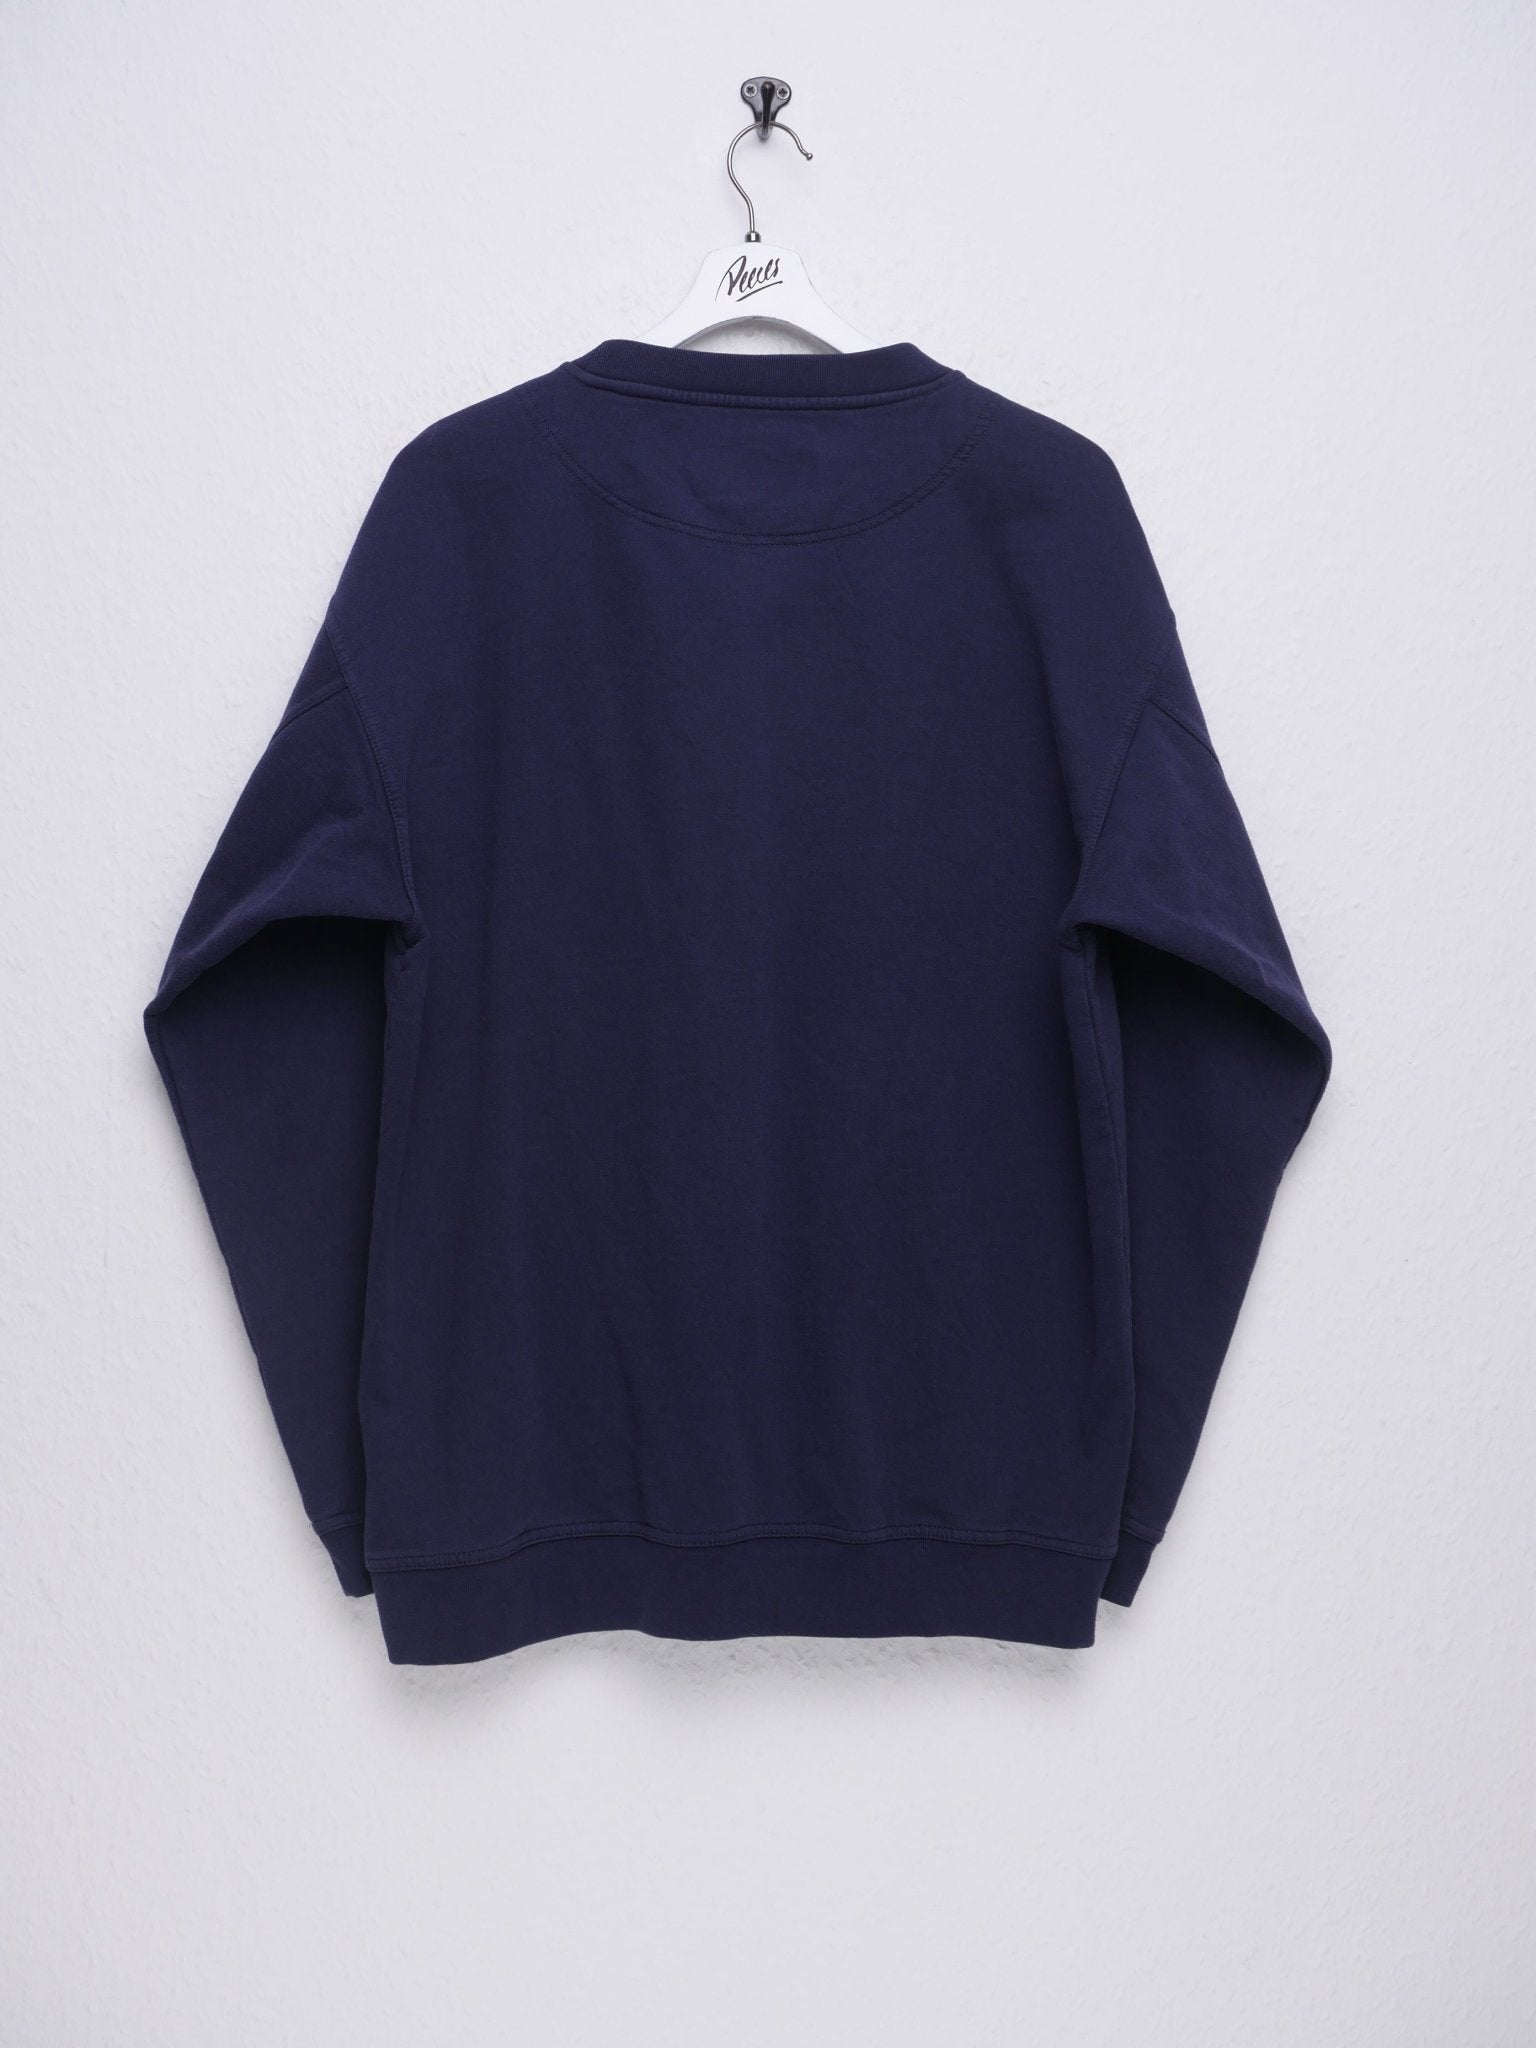 plain navy Sweater - Peeces